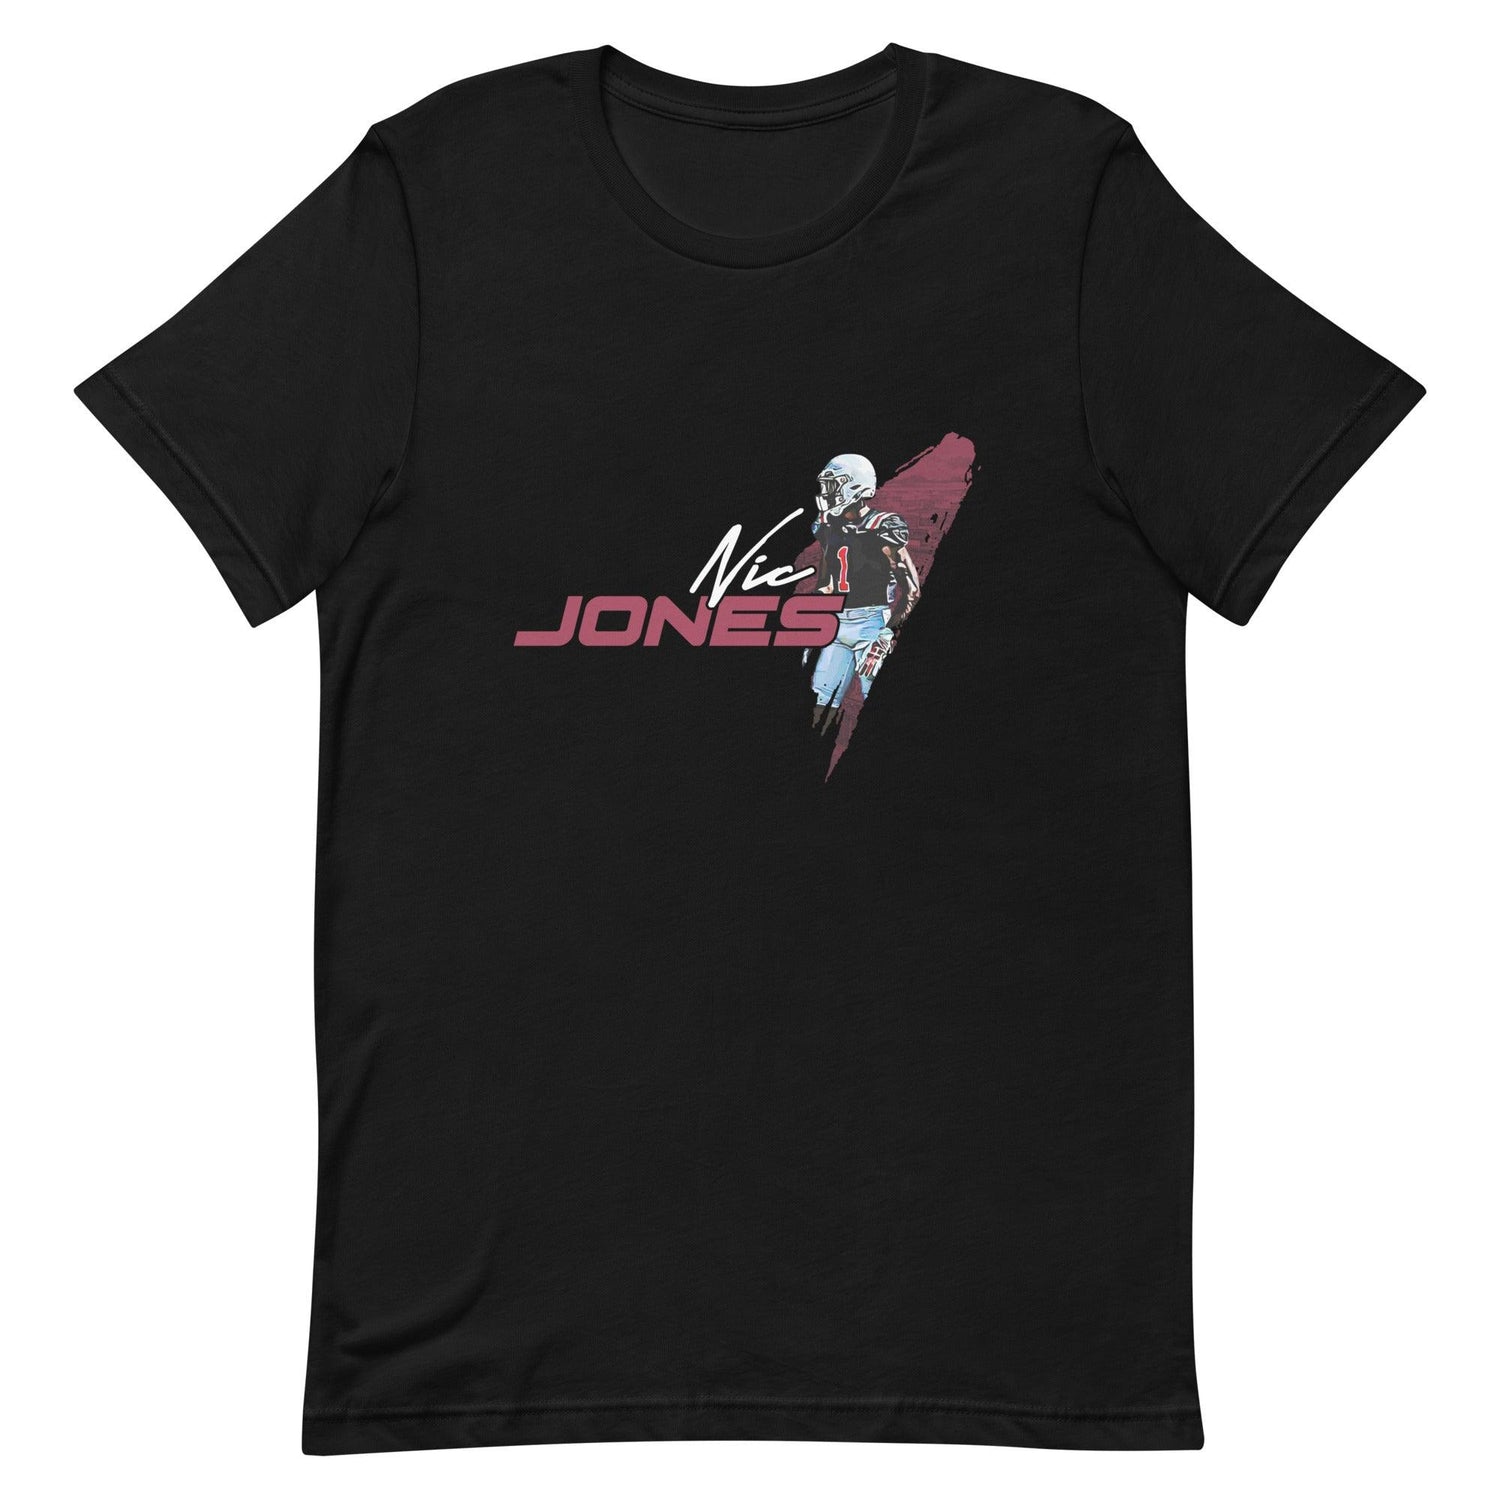 Nic Jones "Essential" t-shirt - Fan Arch